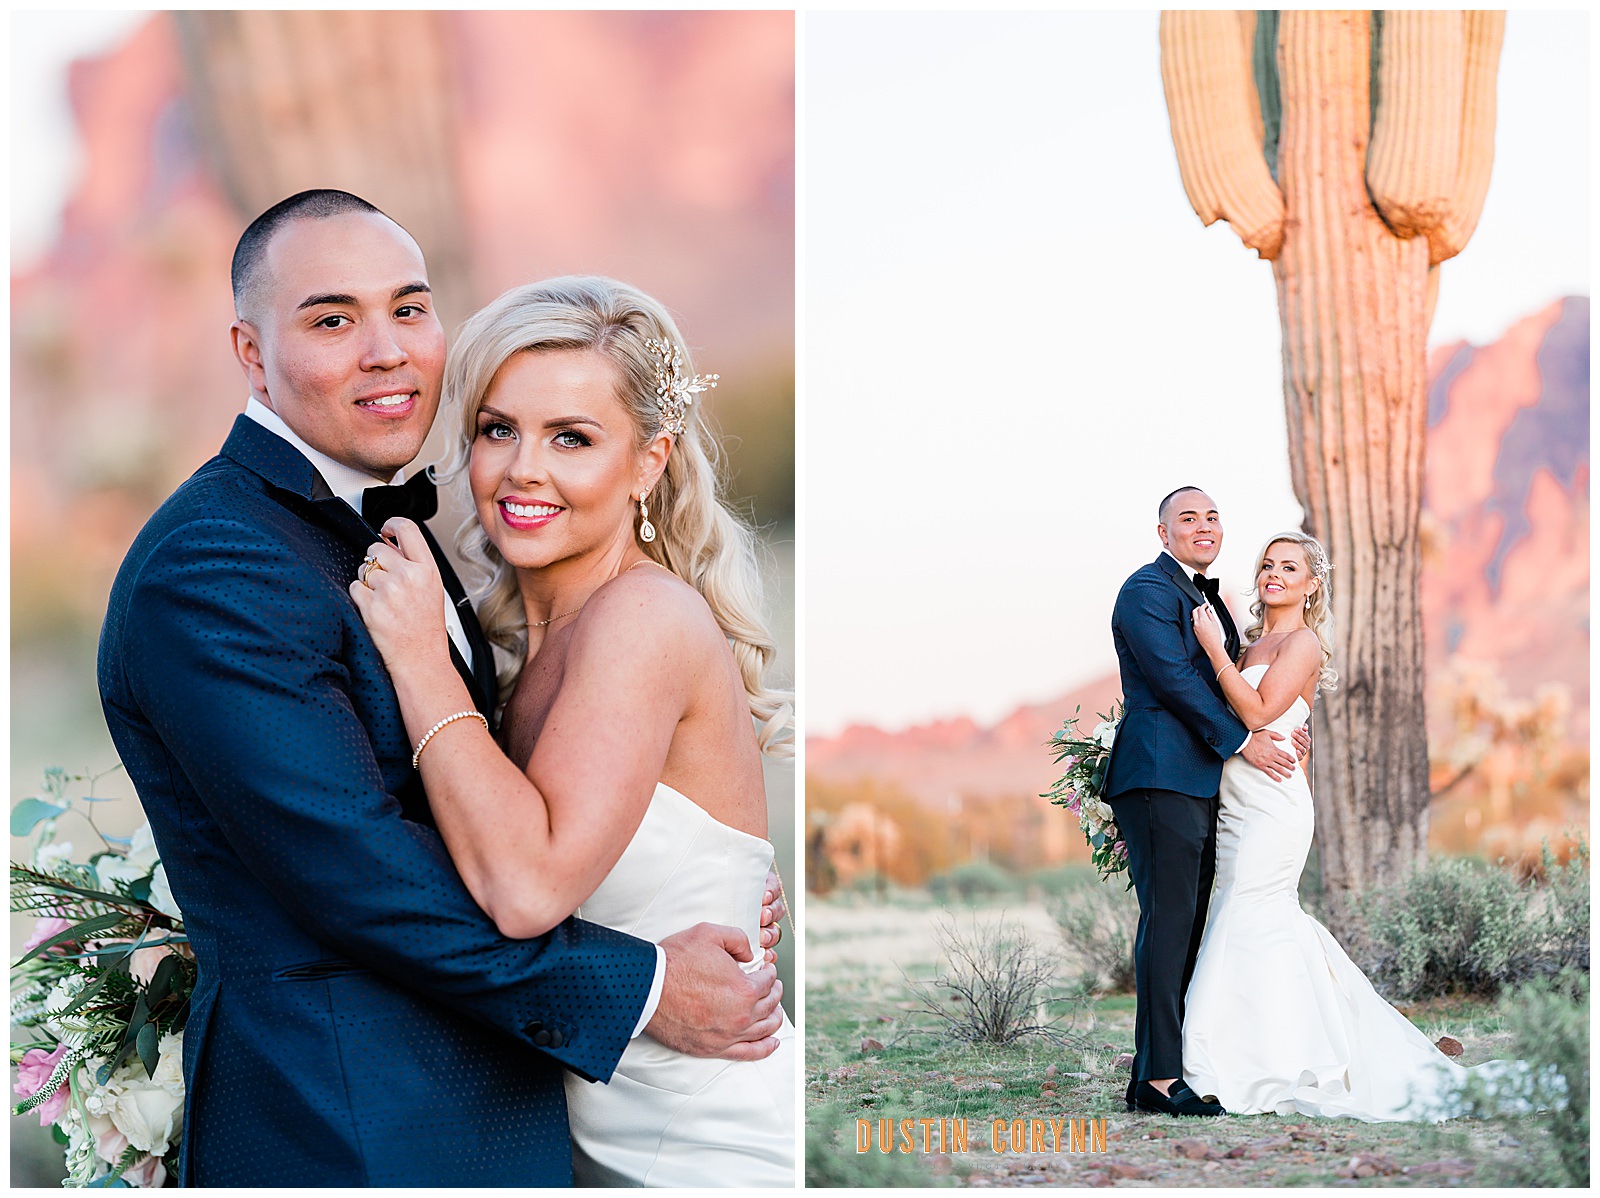 Portraits at Arizona Mountain Wedding